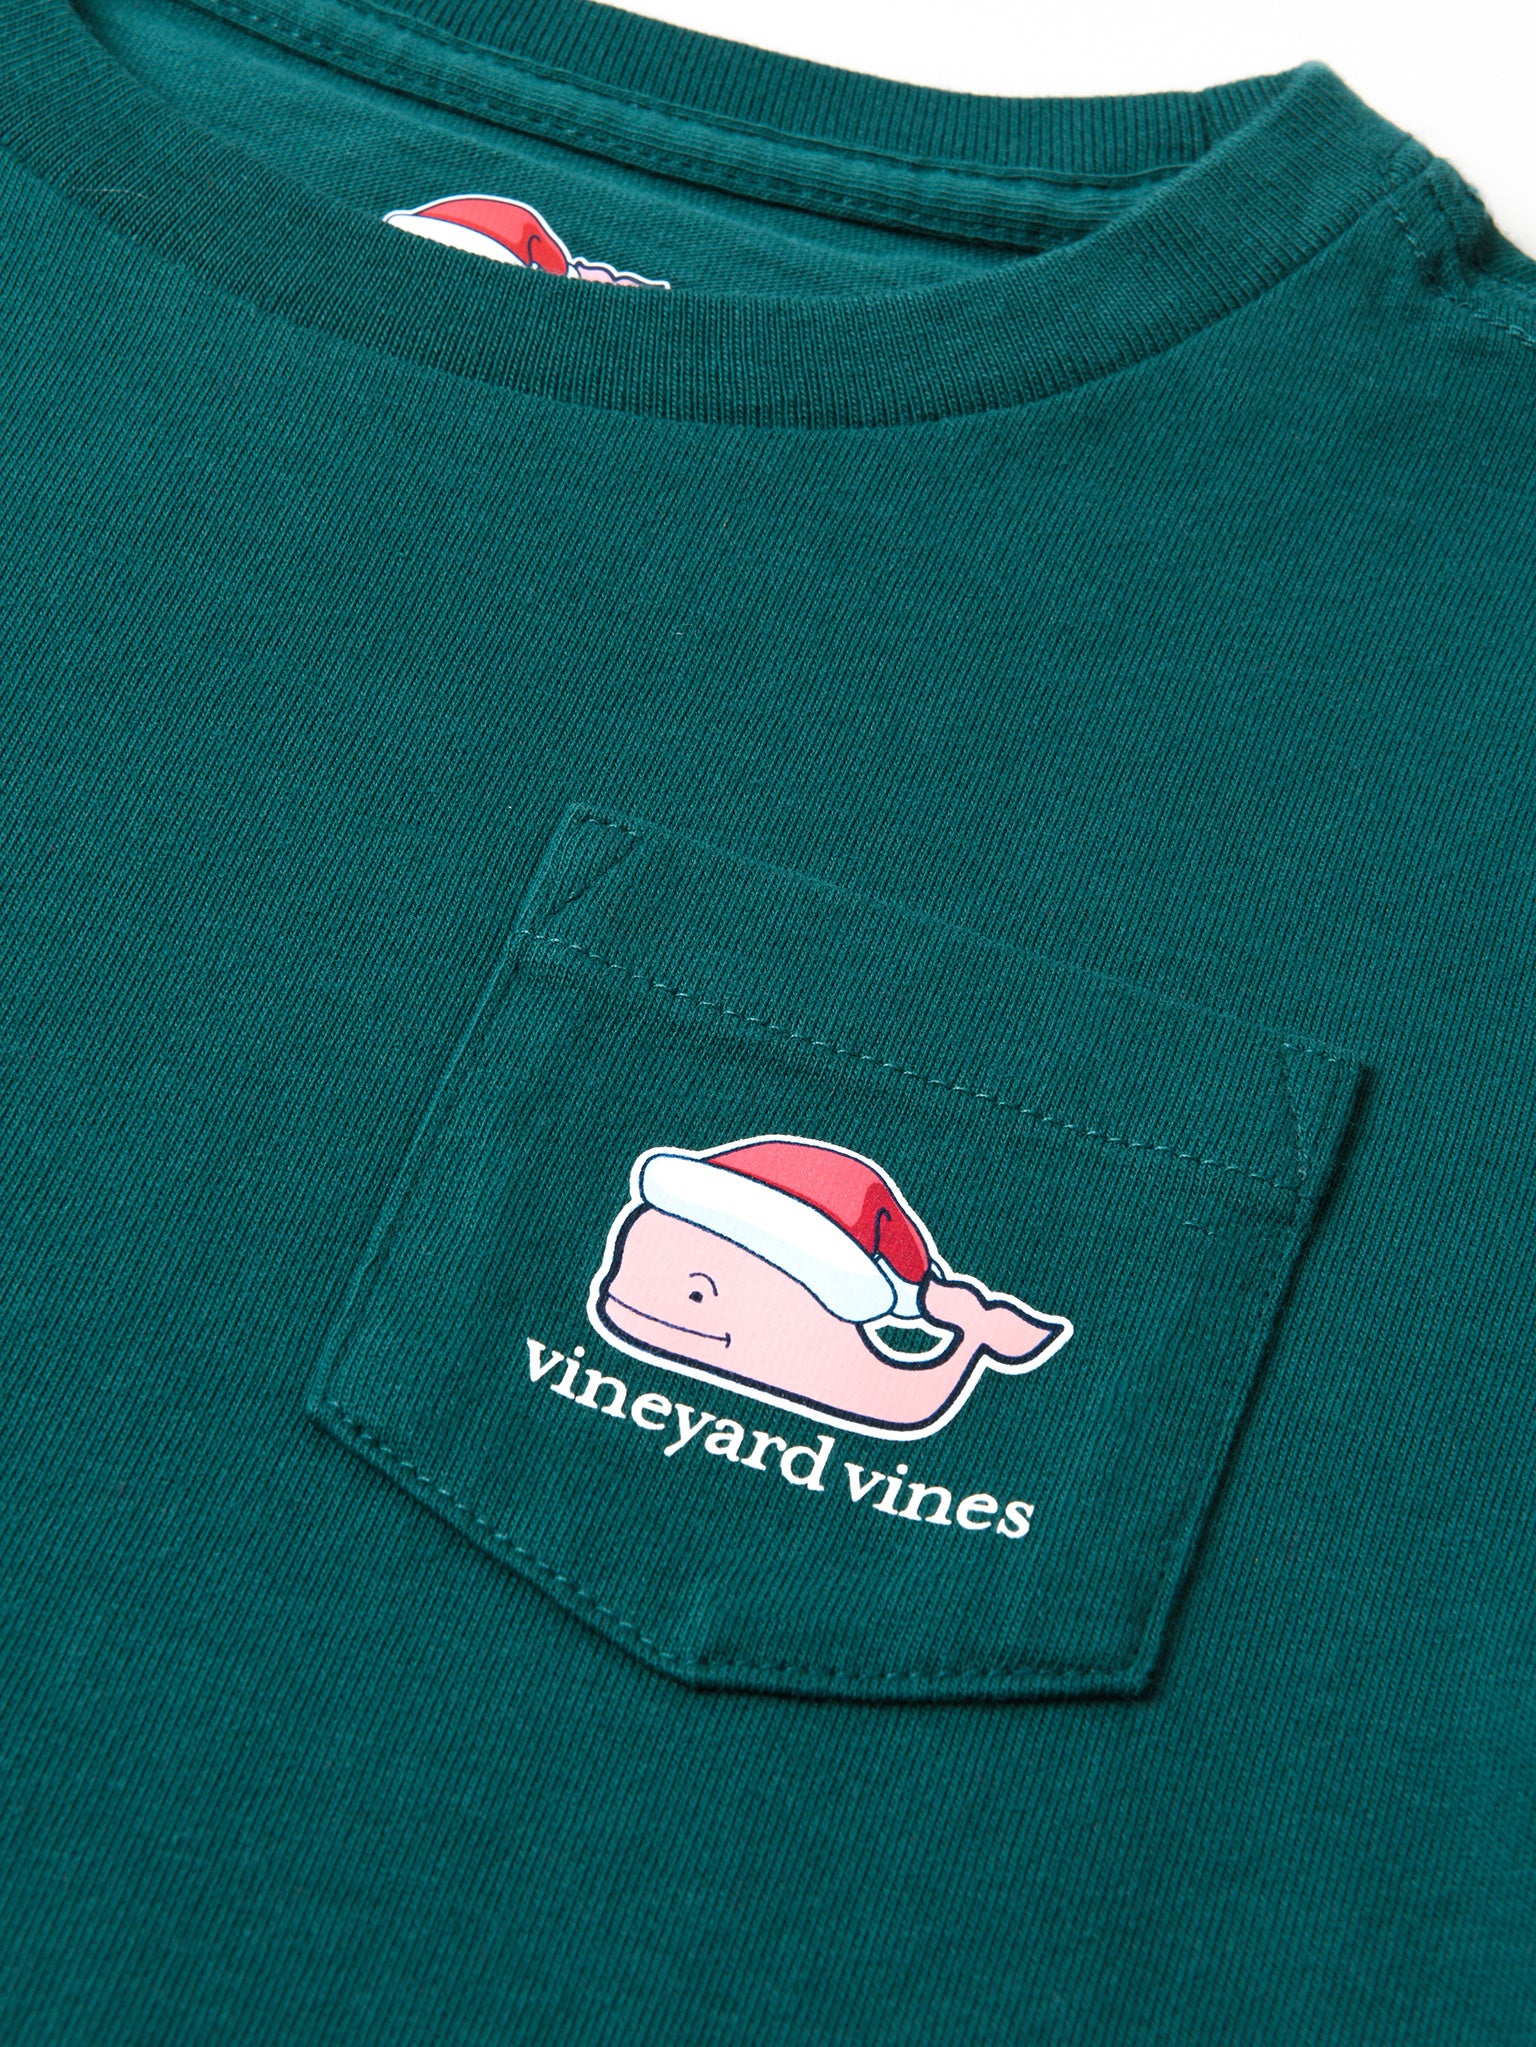 Vineyard Vines Whale Youth Boston Christmas Long Sleeve Icon Tee Shirt Size  L